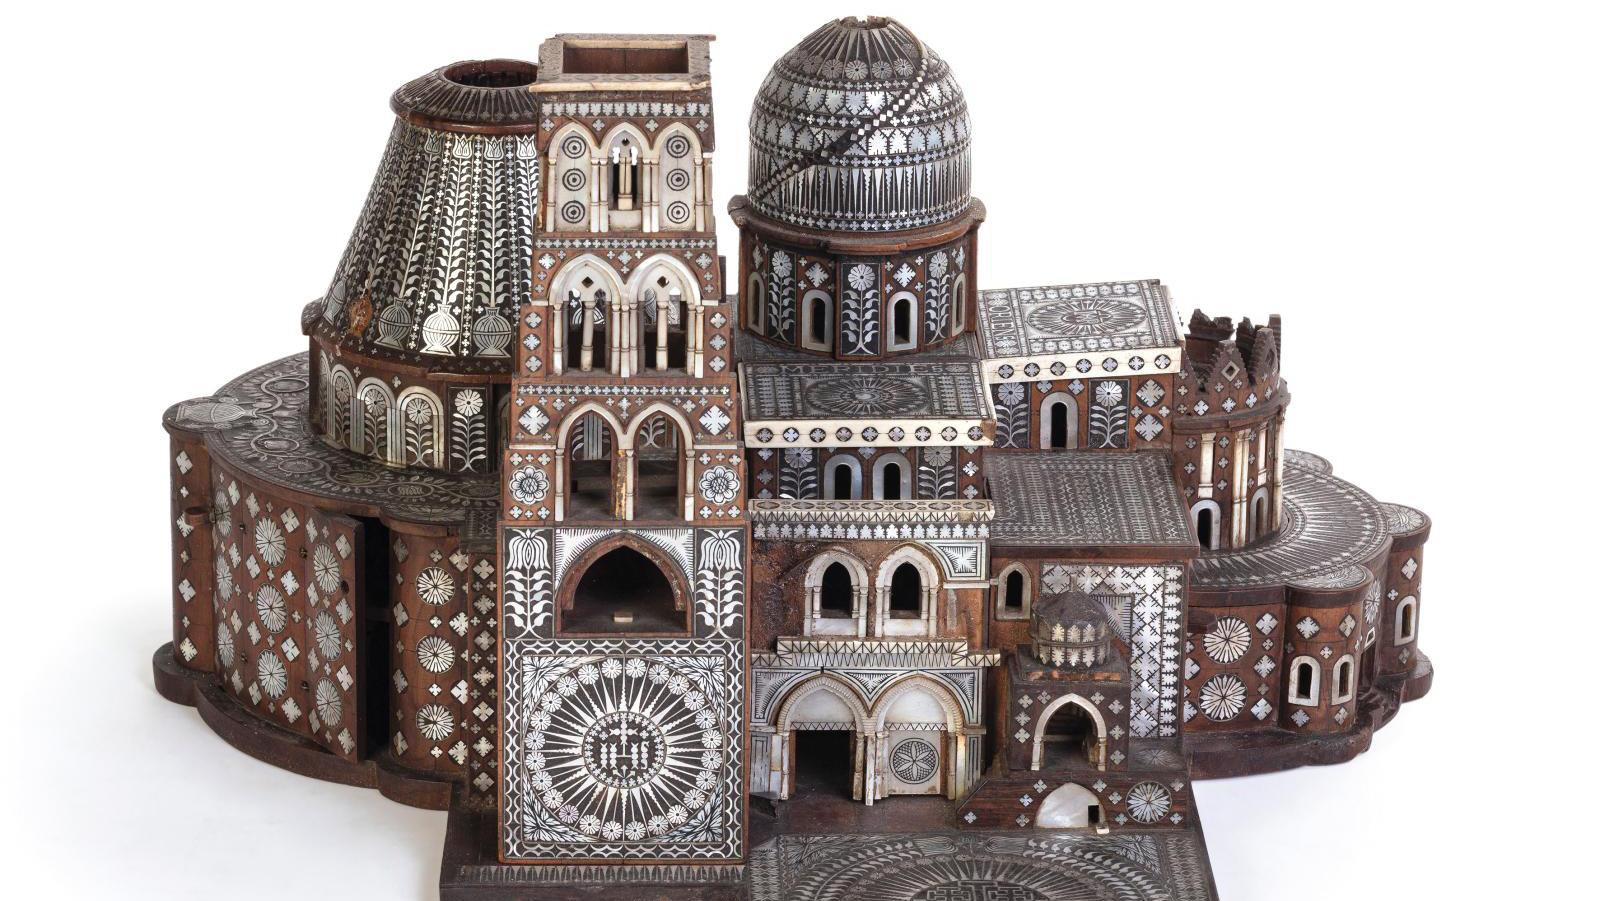   Rare Model of Holy Sepulchre Captivates Bidders